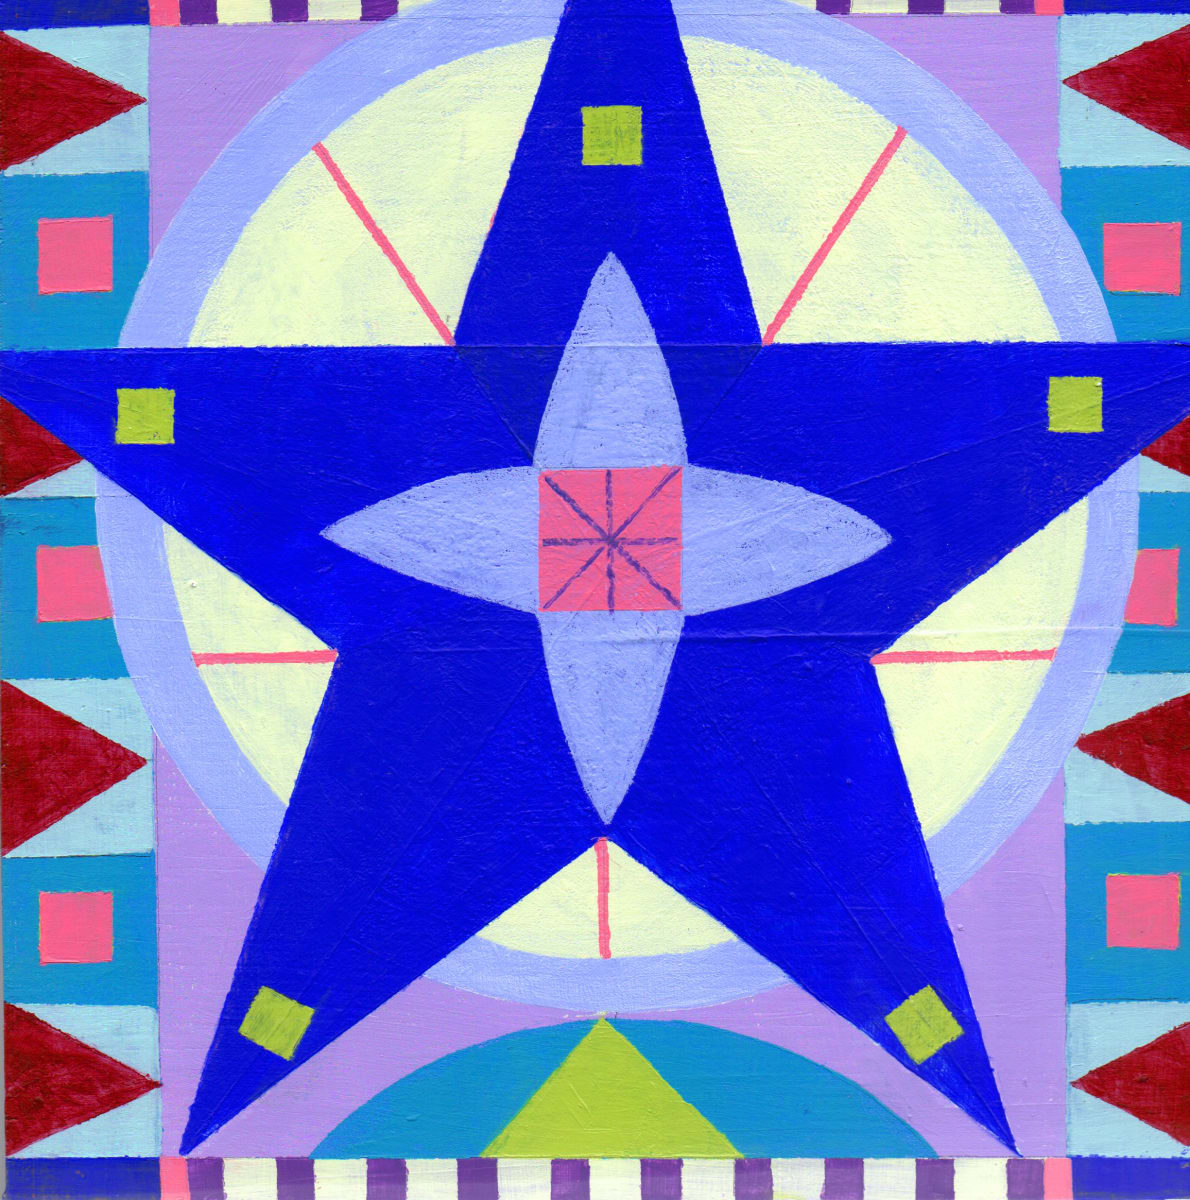 Star Map 4 by Asandra  Image: Star Map 4, acrylic on wood panel, 8" x 8" x 1.5"